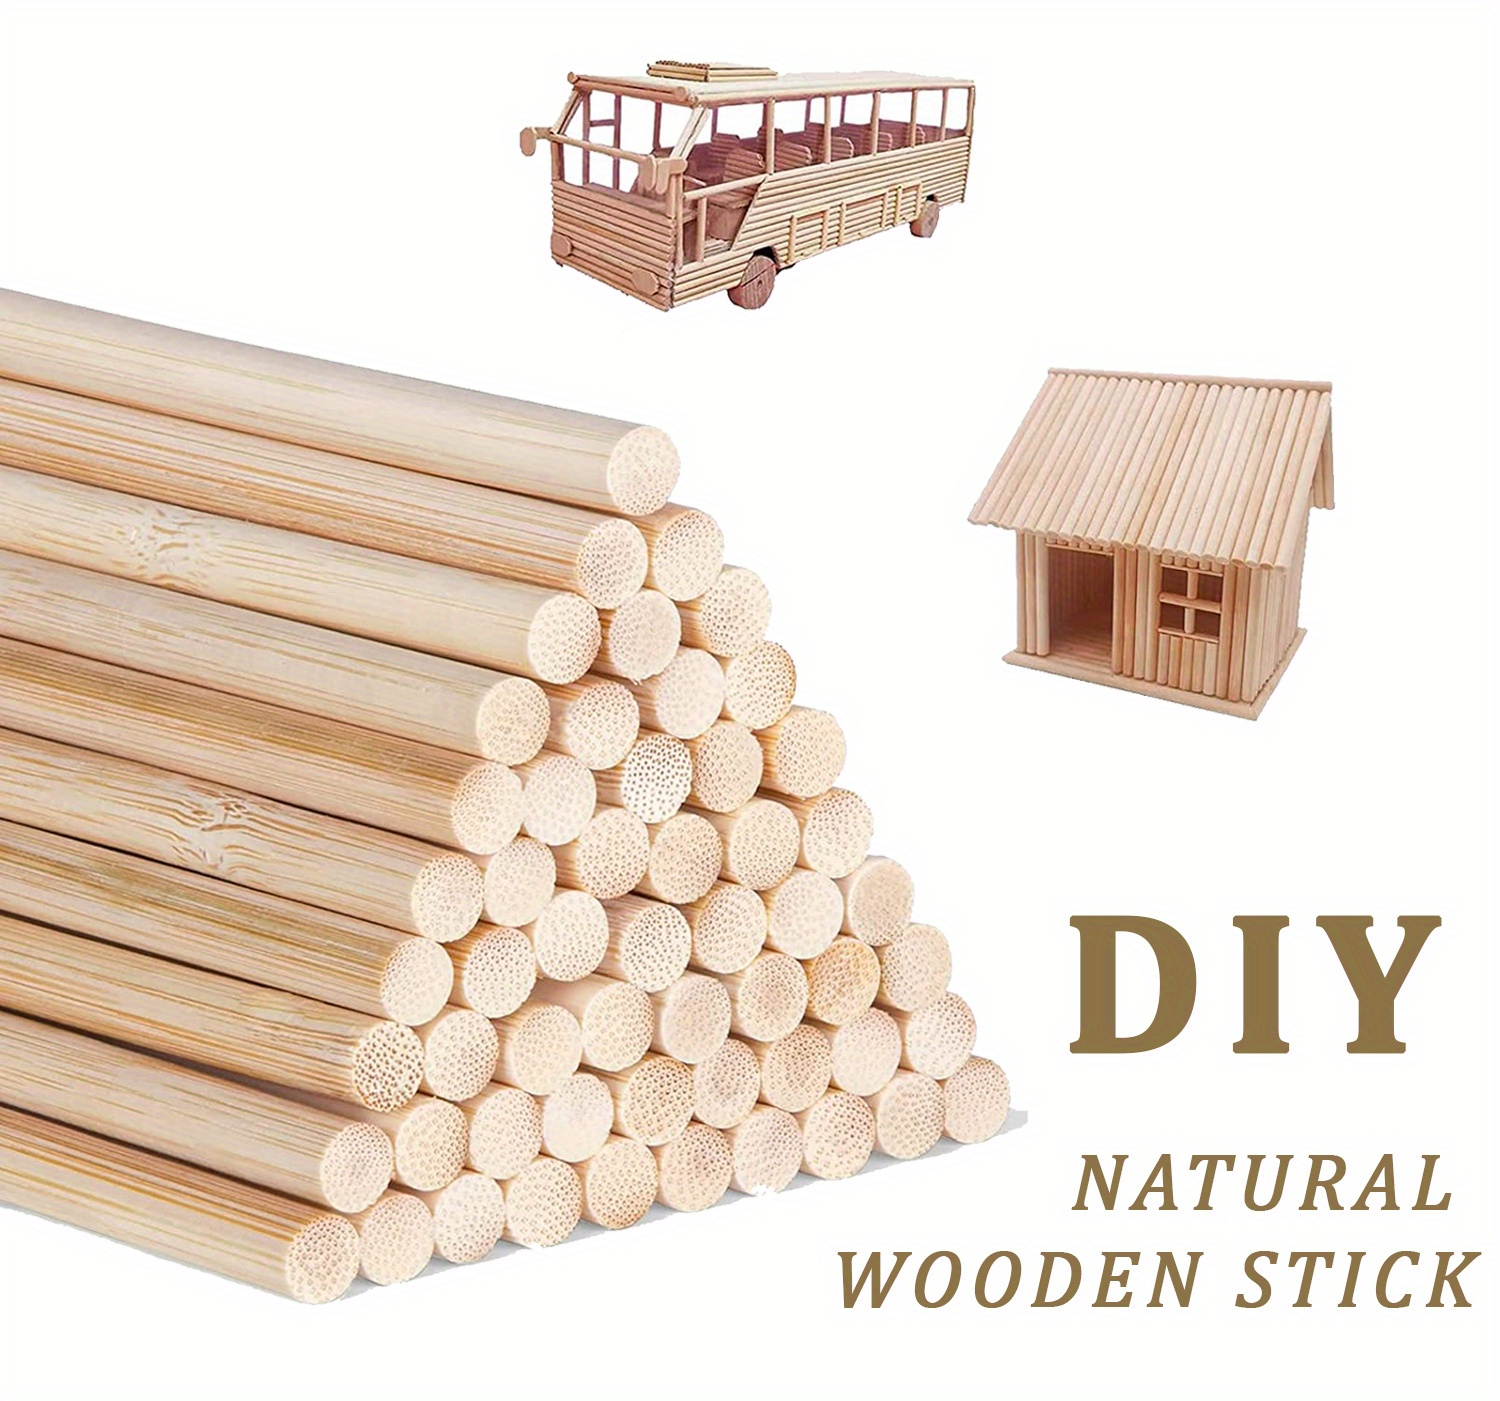 Wooden Craft Sticks - Hardwood Dowels Poles Rods Craft Wood Pieces 100 Pcs